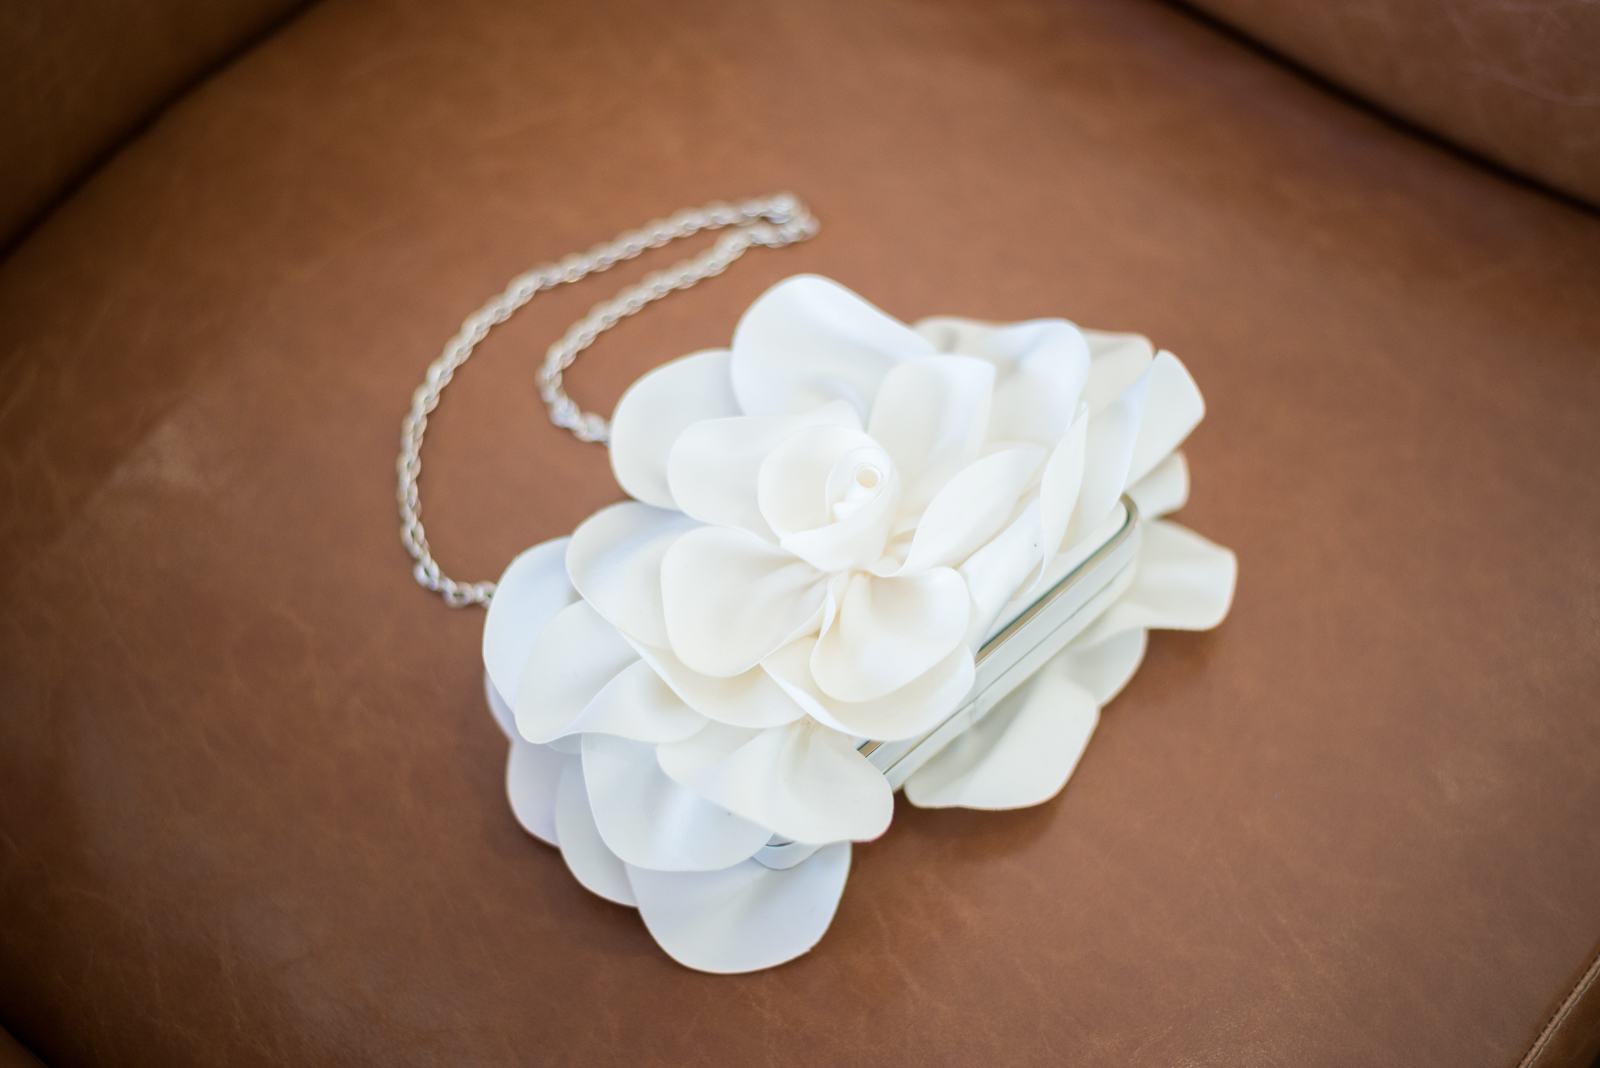 white-rose-wedding-clutch-as-a-purse